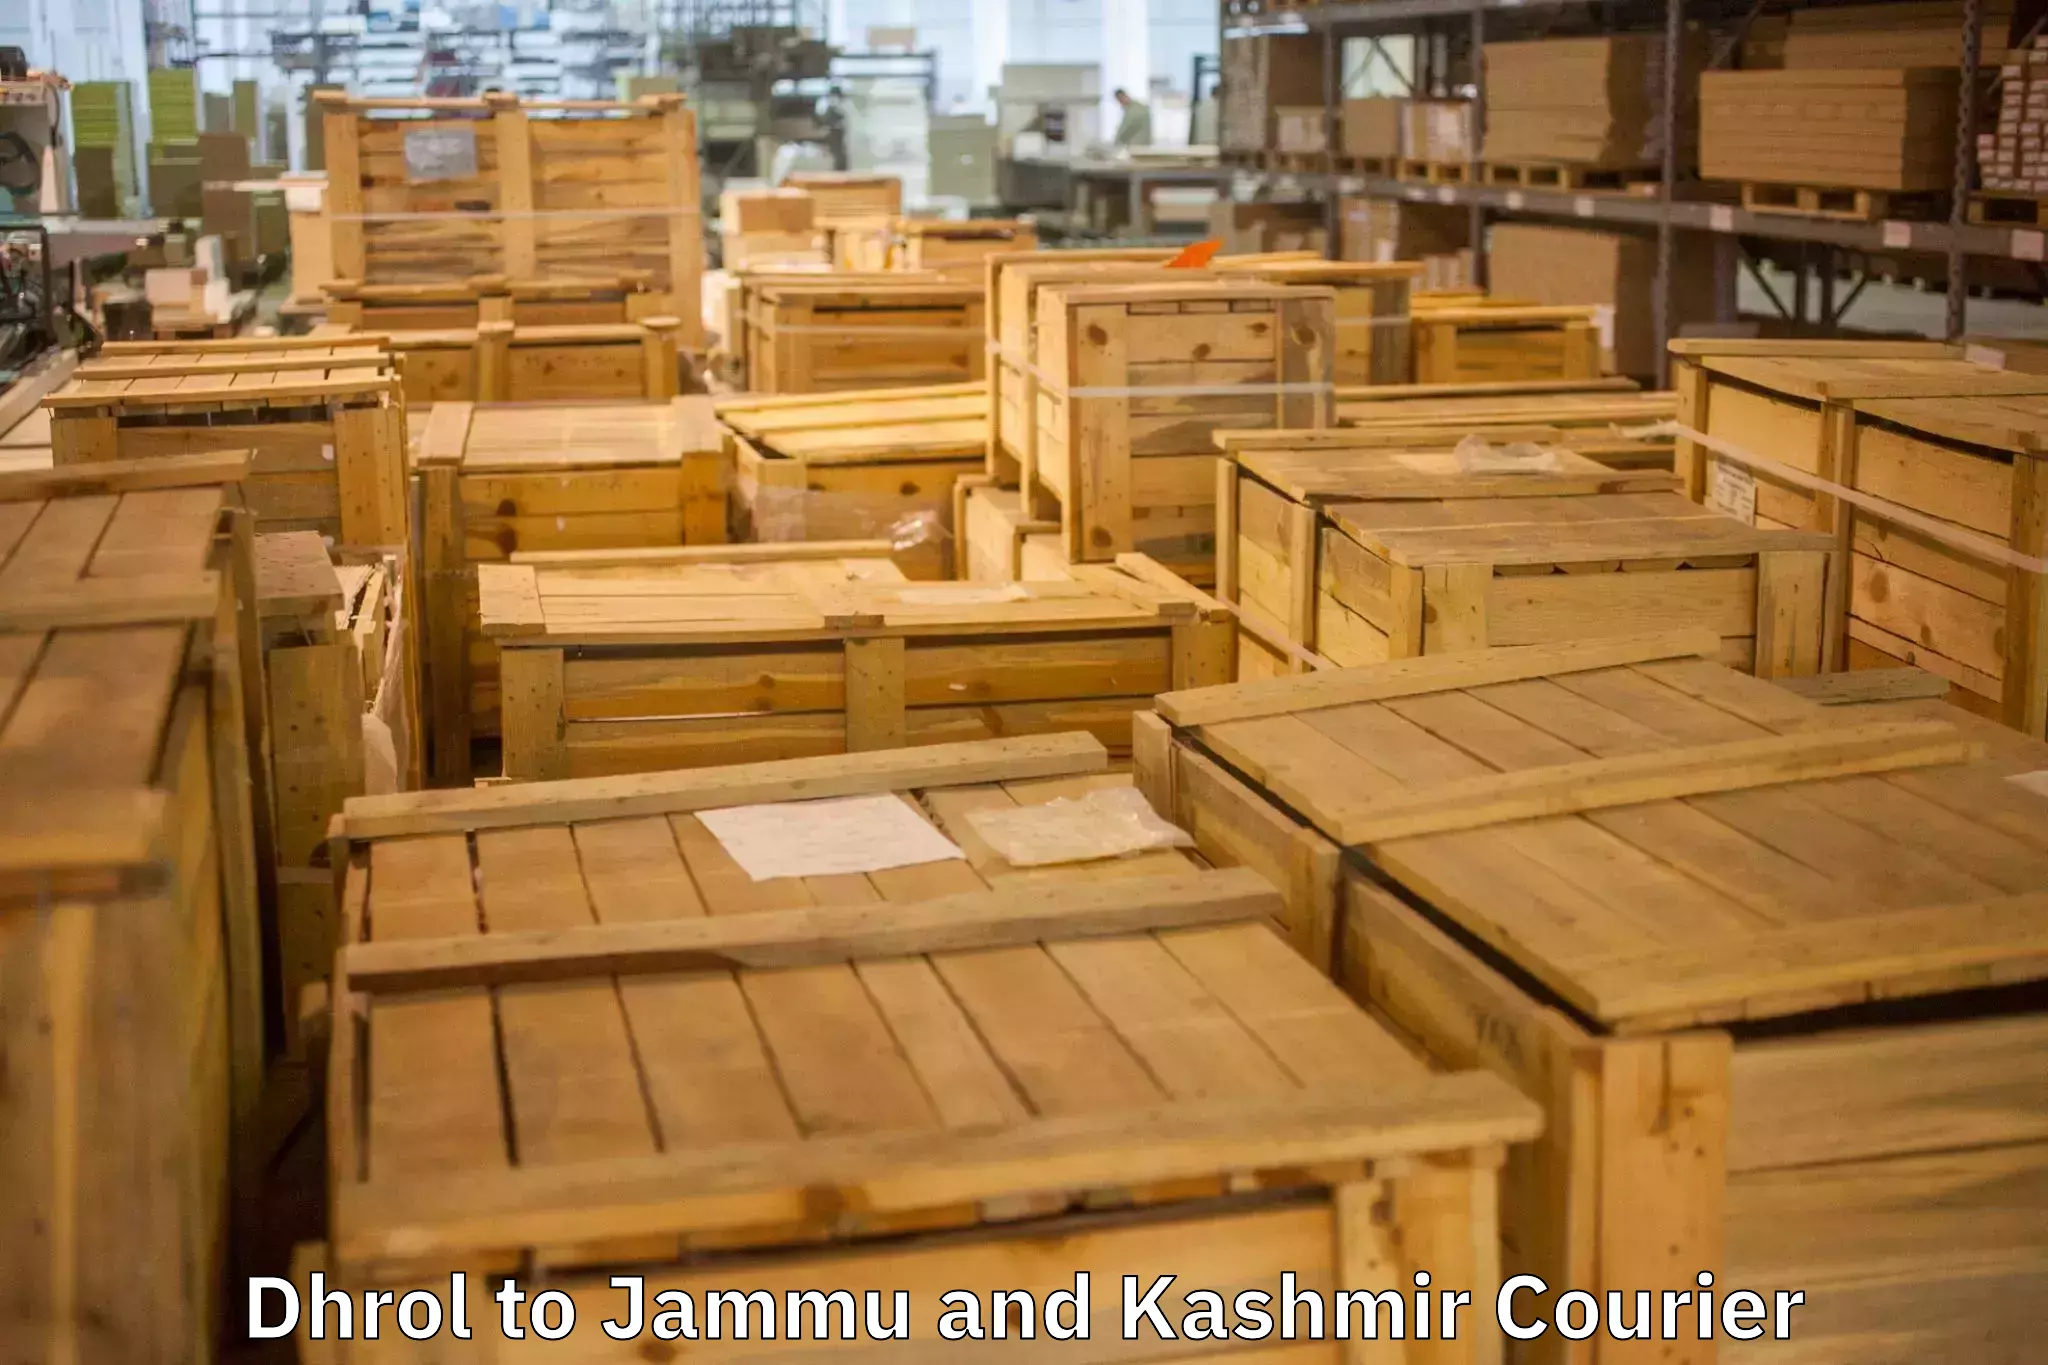 Professional moving company Dhrol to Jammu and Kashmir